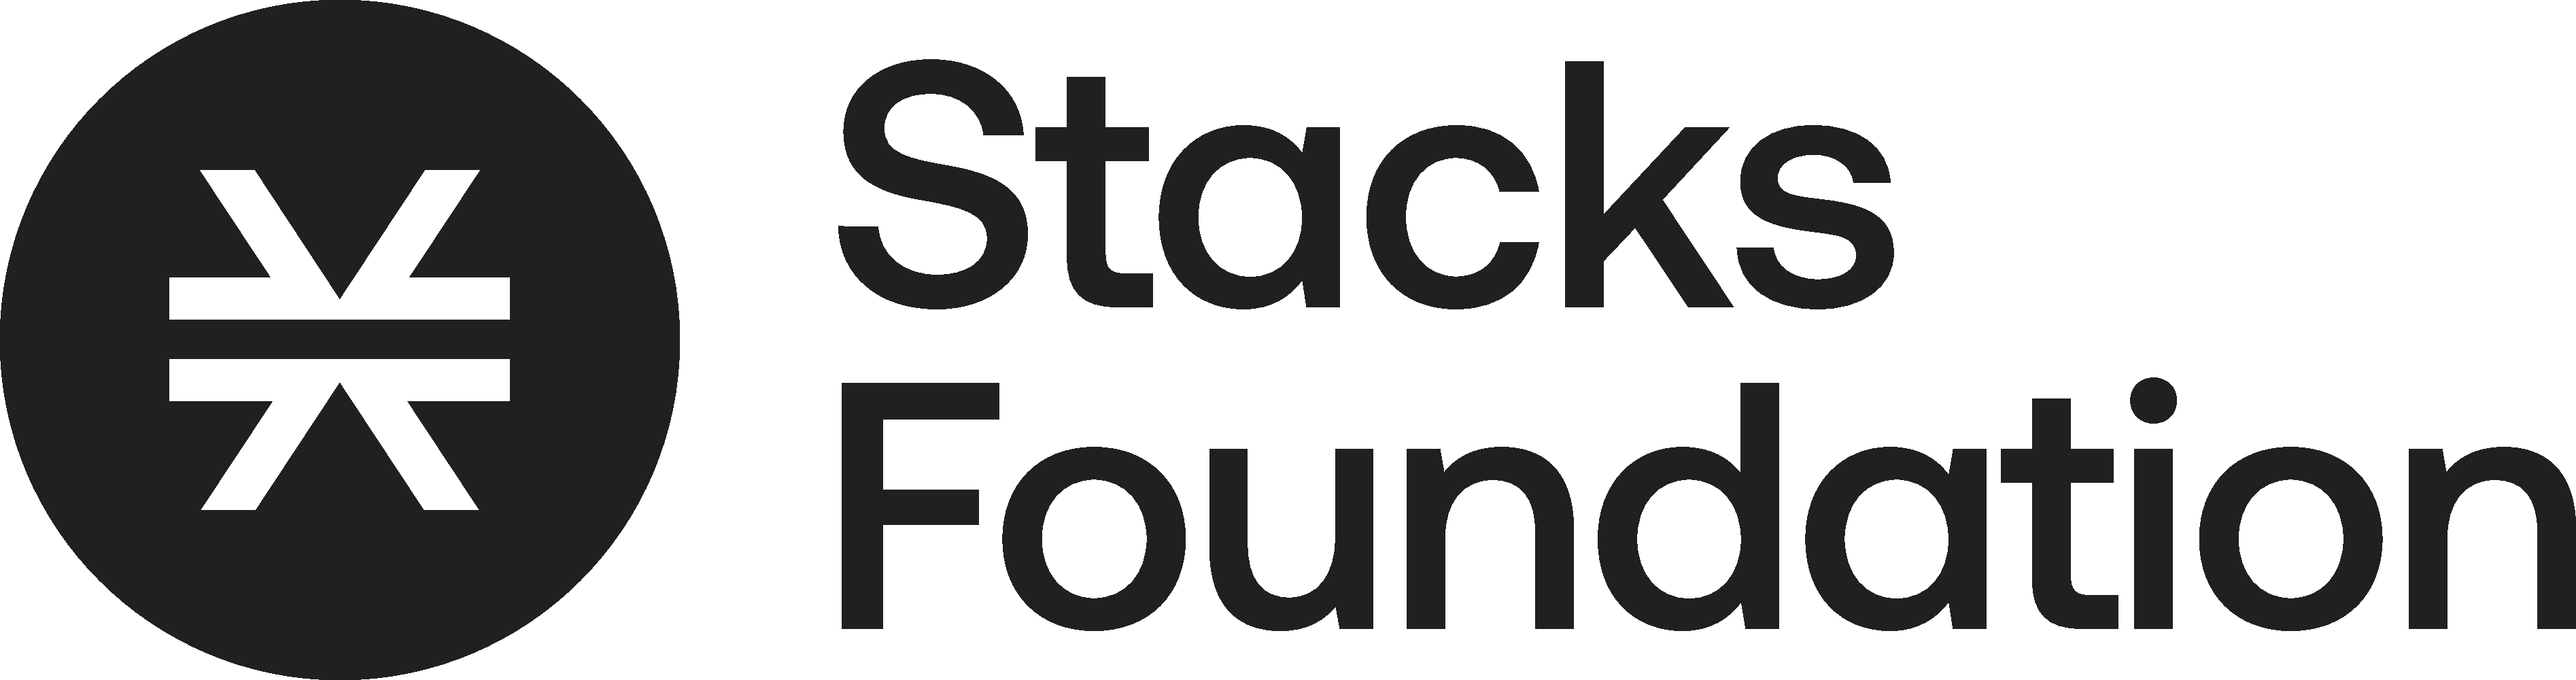 Stacks Foundation